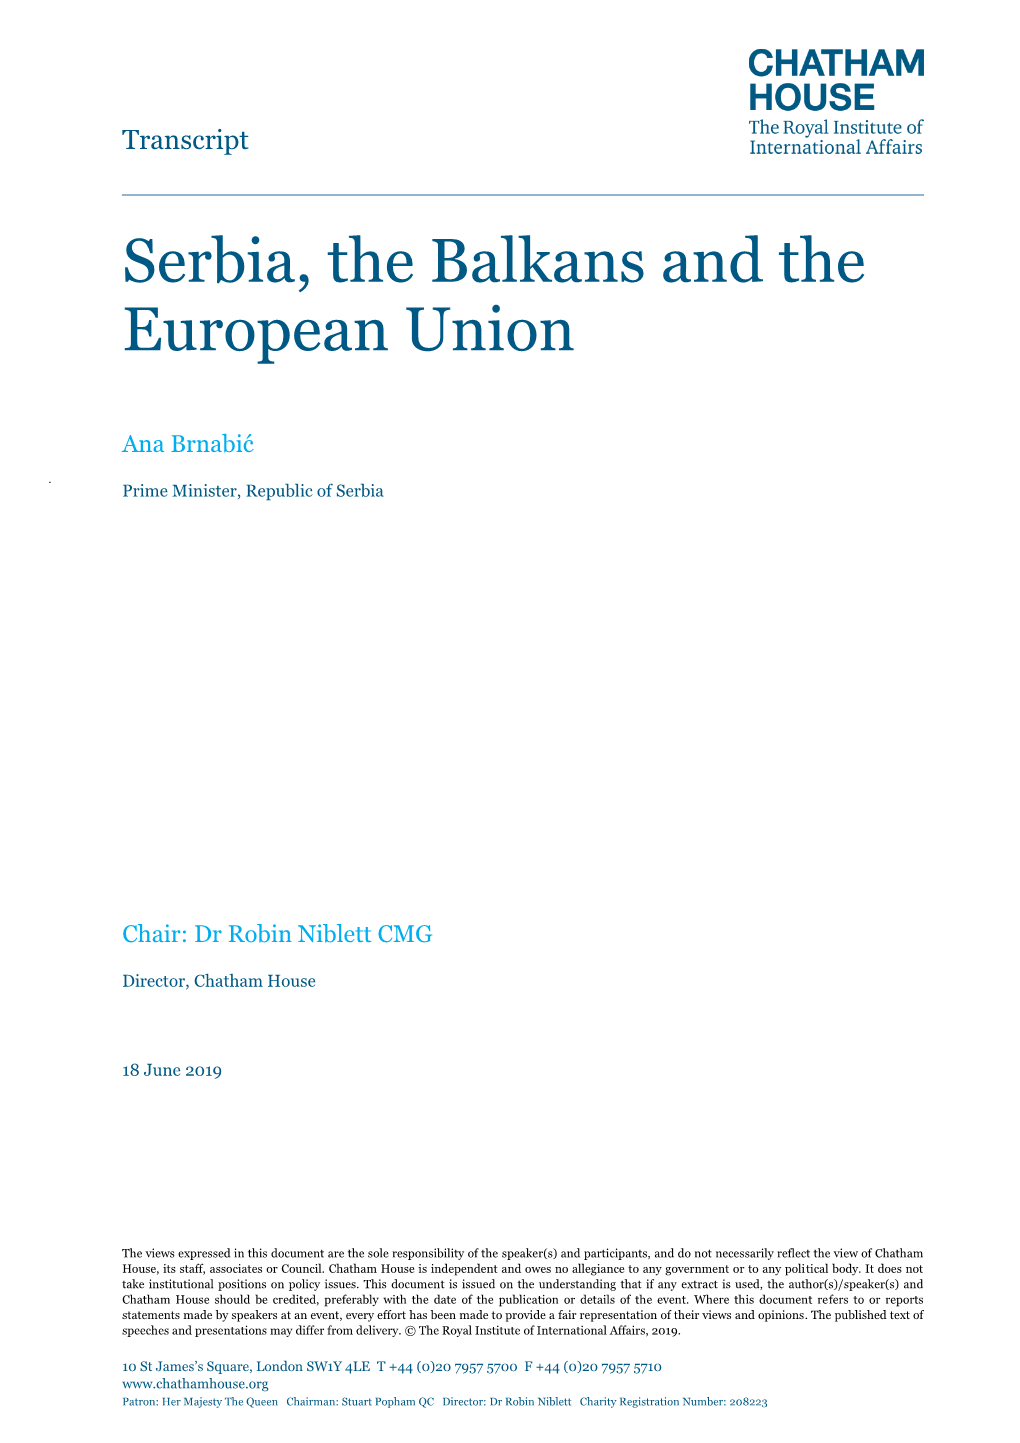 Serbia, the Balkans and the European Union